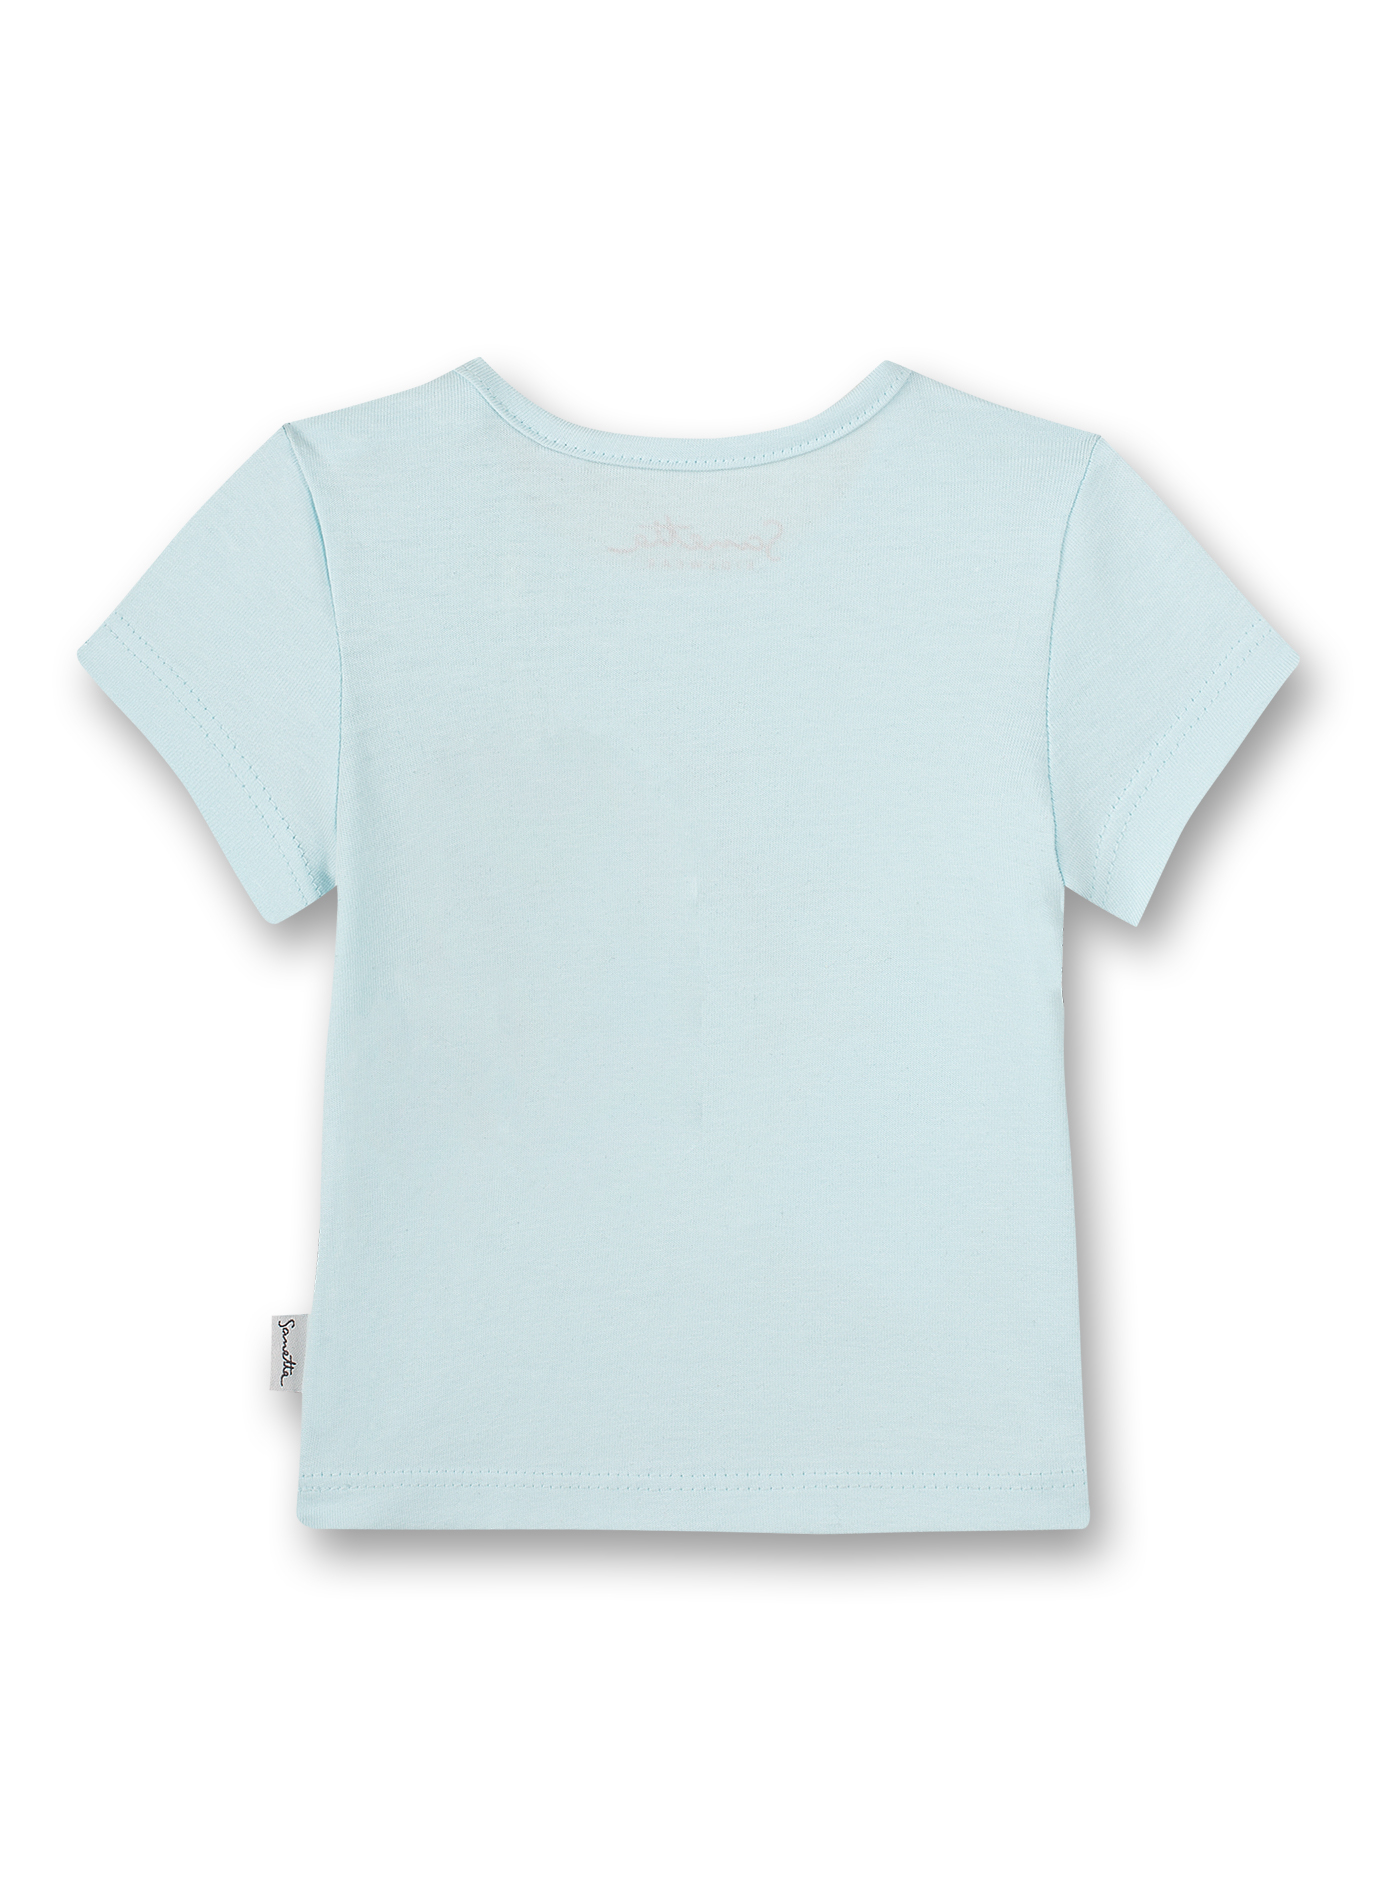 Mädchen T-Shirt Hellblau Kangaroo